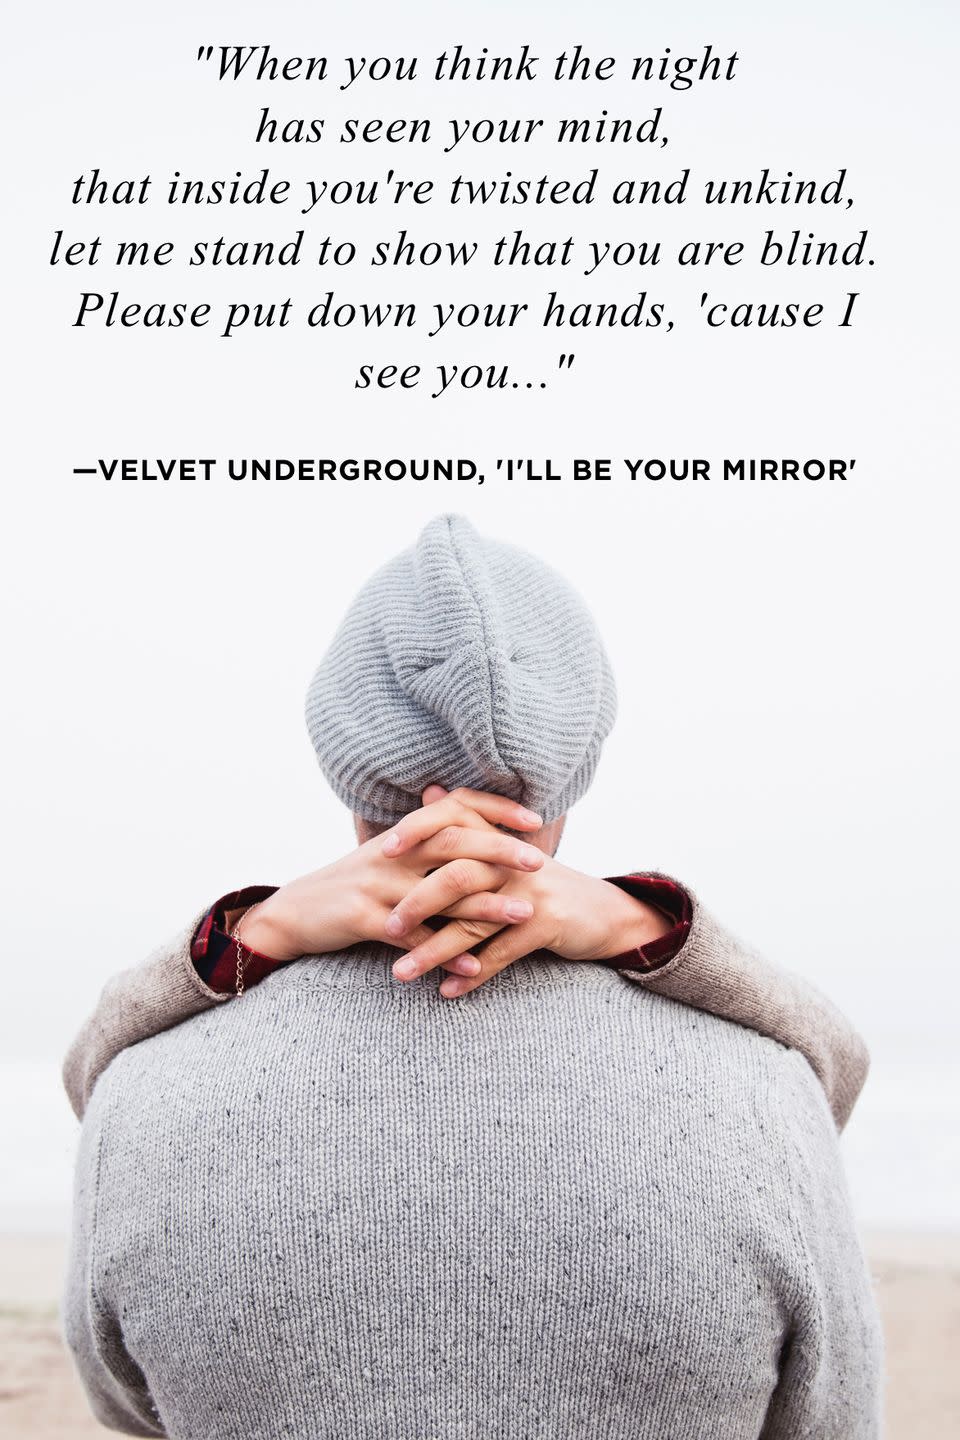 27) Velvet Underground, 'I'll Be Your Mirror'